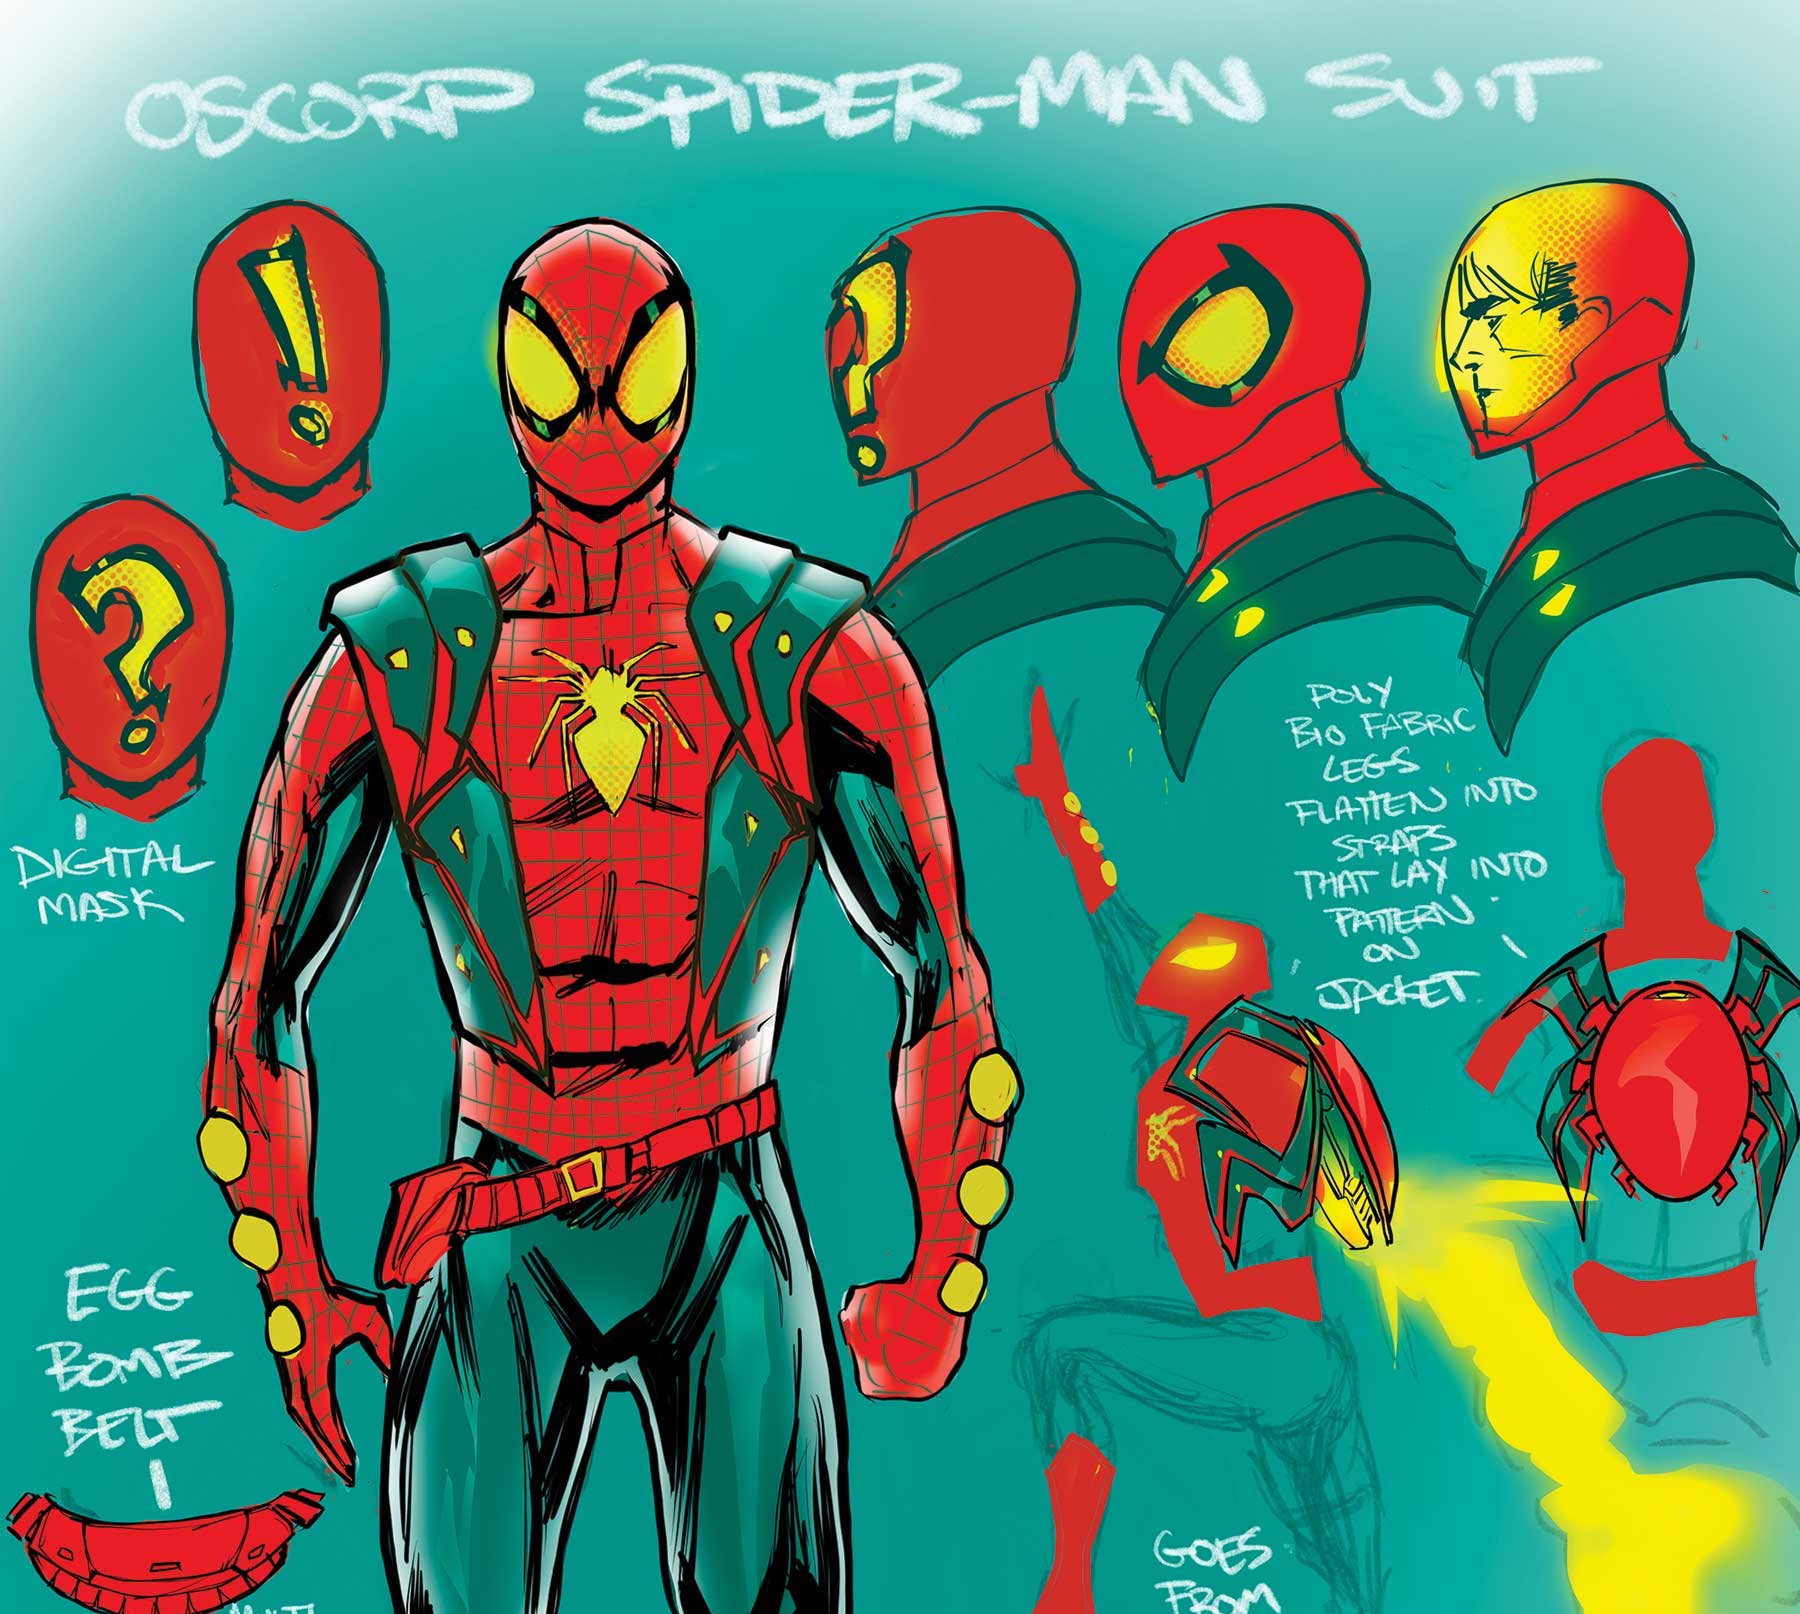 Spider-Man gets new Oscorp costume in 'Amazing Spider-Man' #7